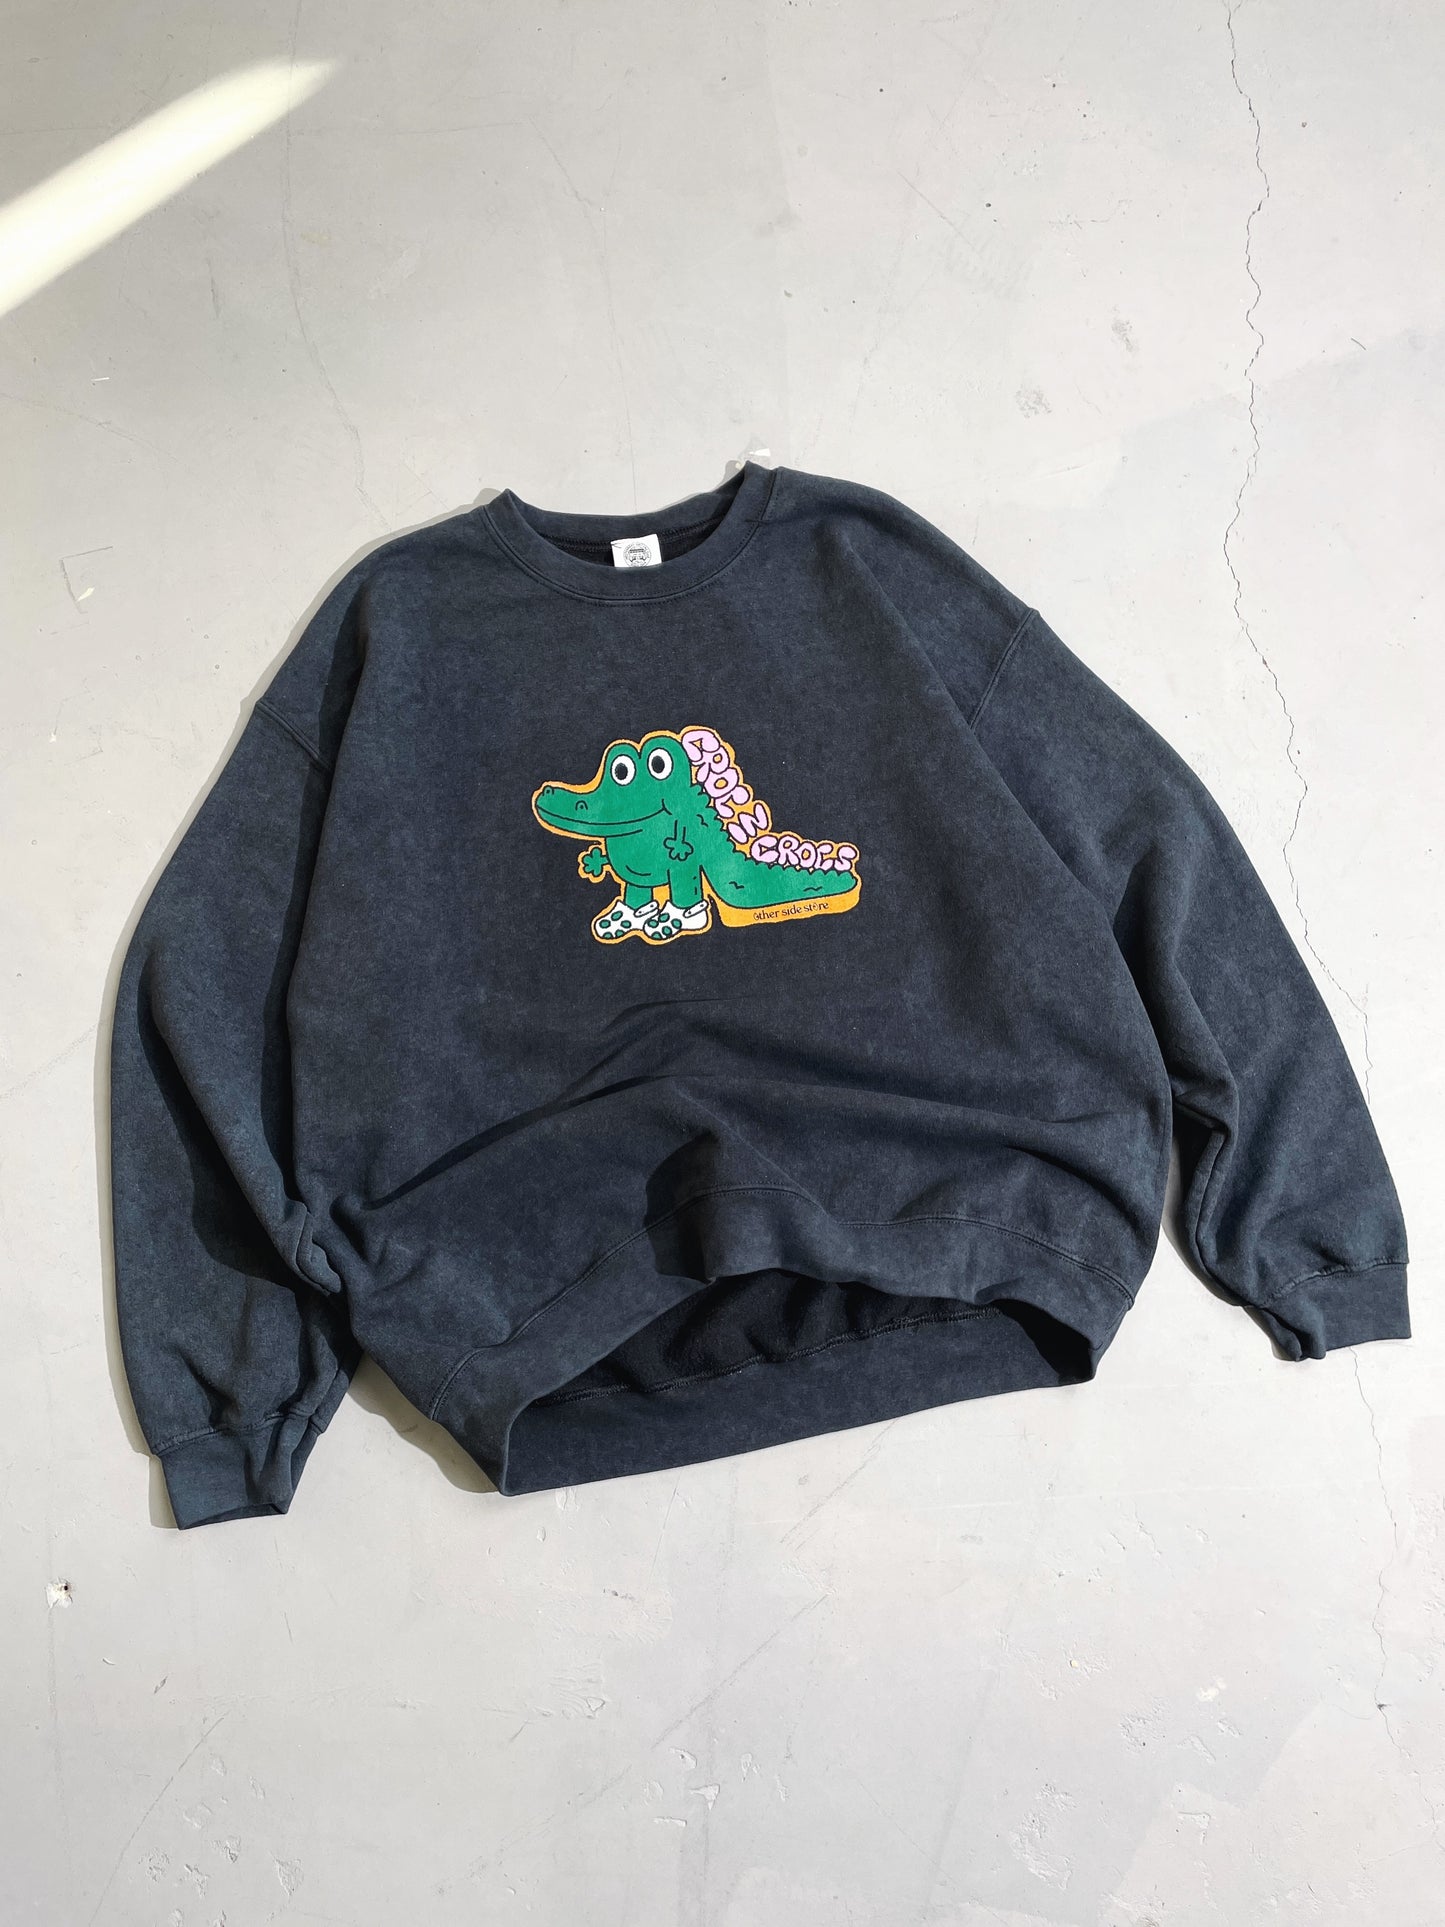 Other Side Store 'Croc In Crocs' Acid Wash Sweater - Black